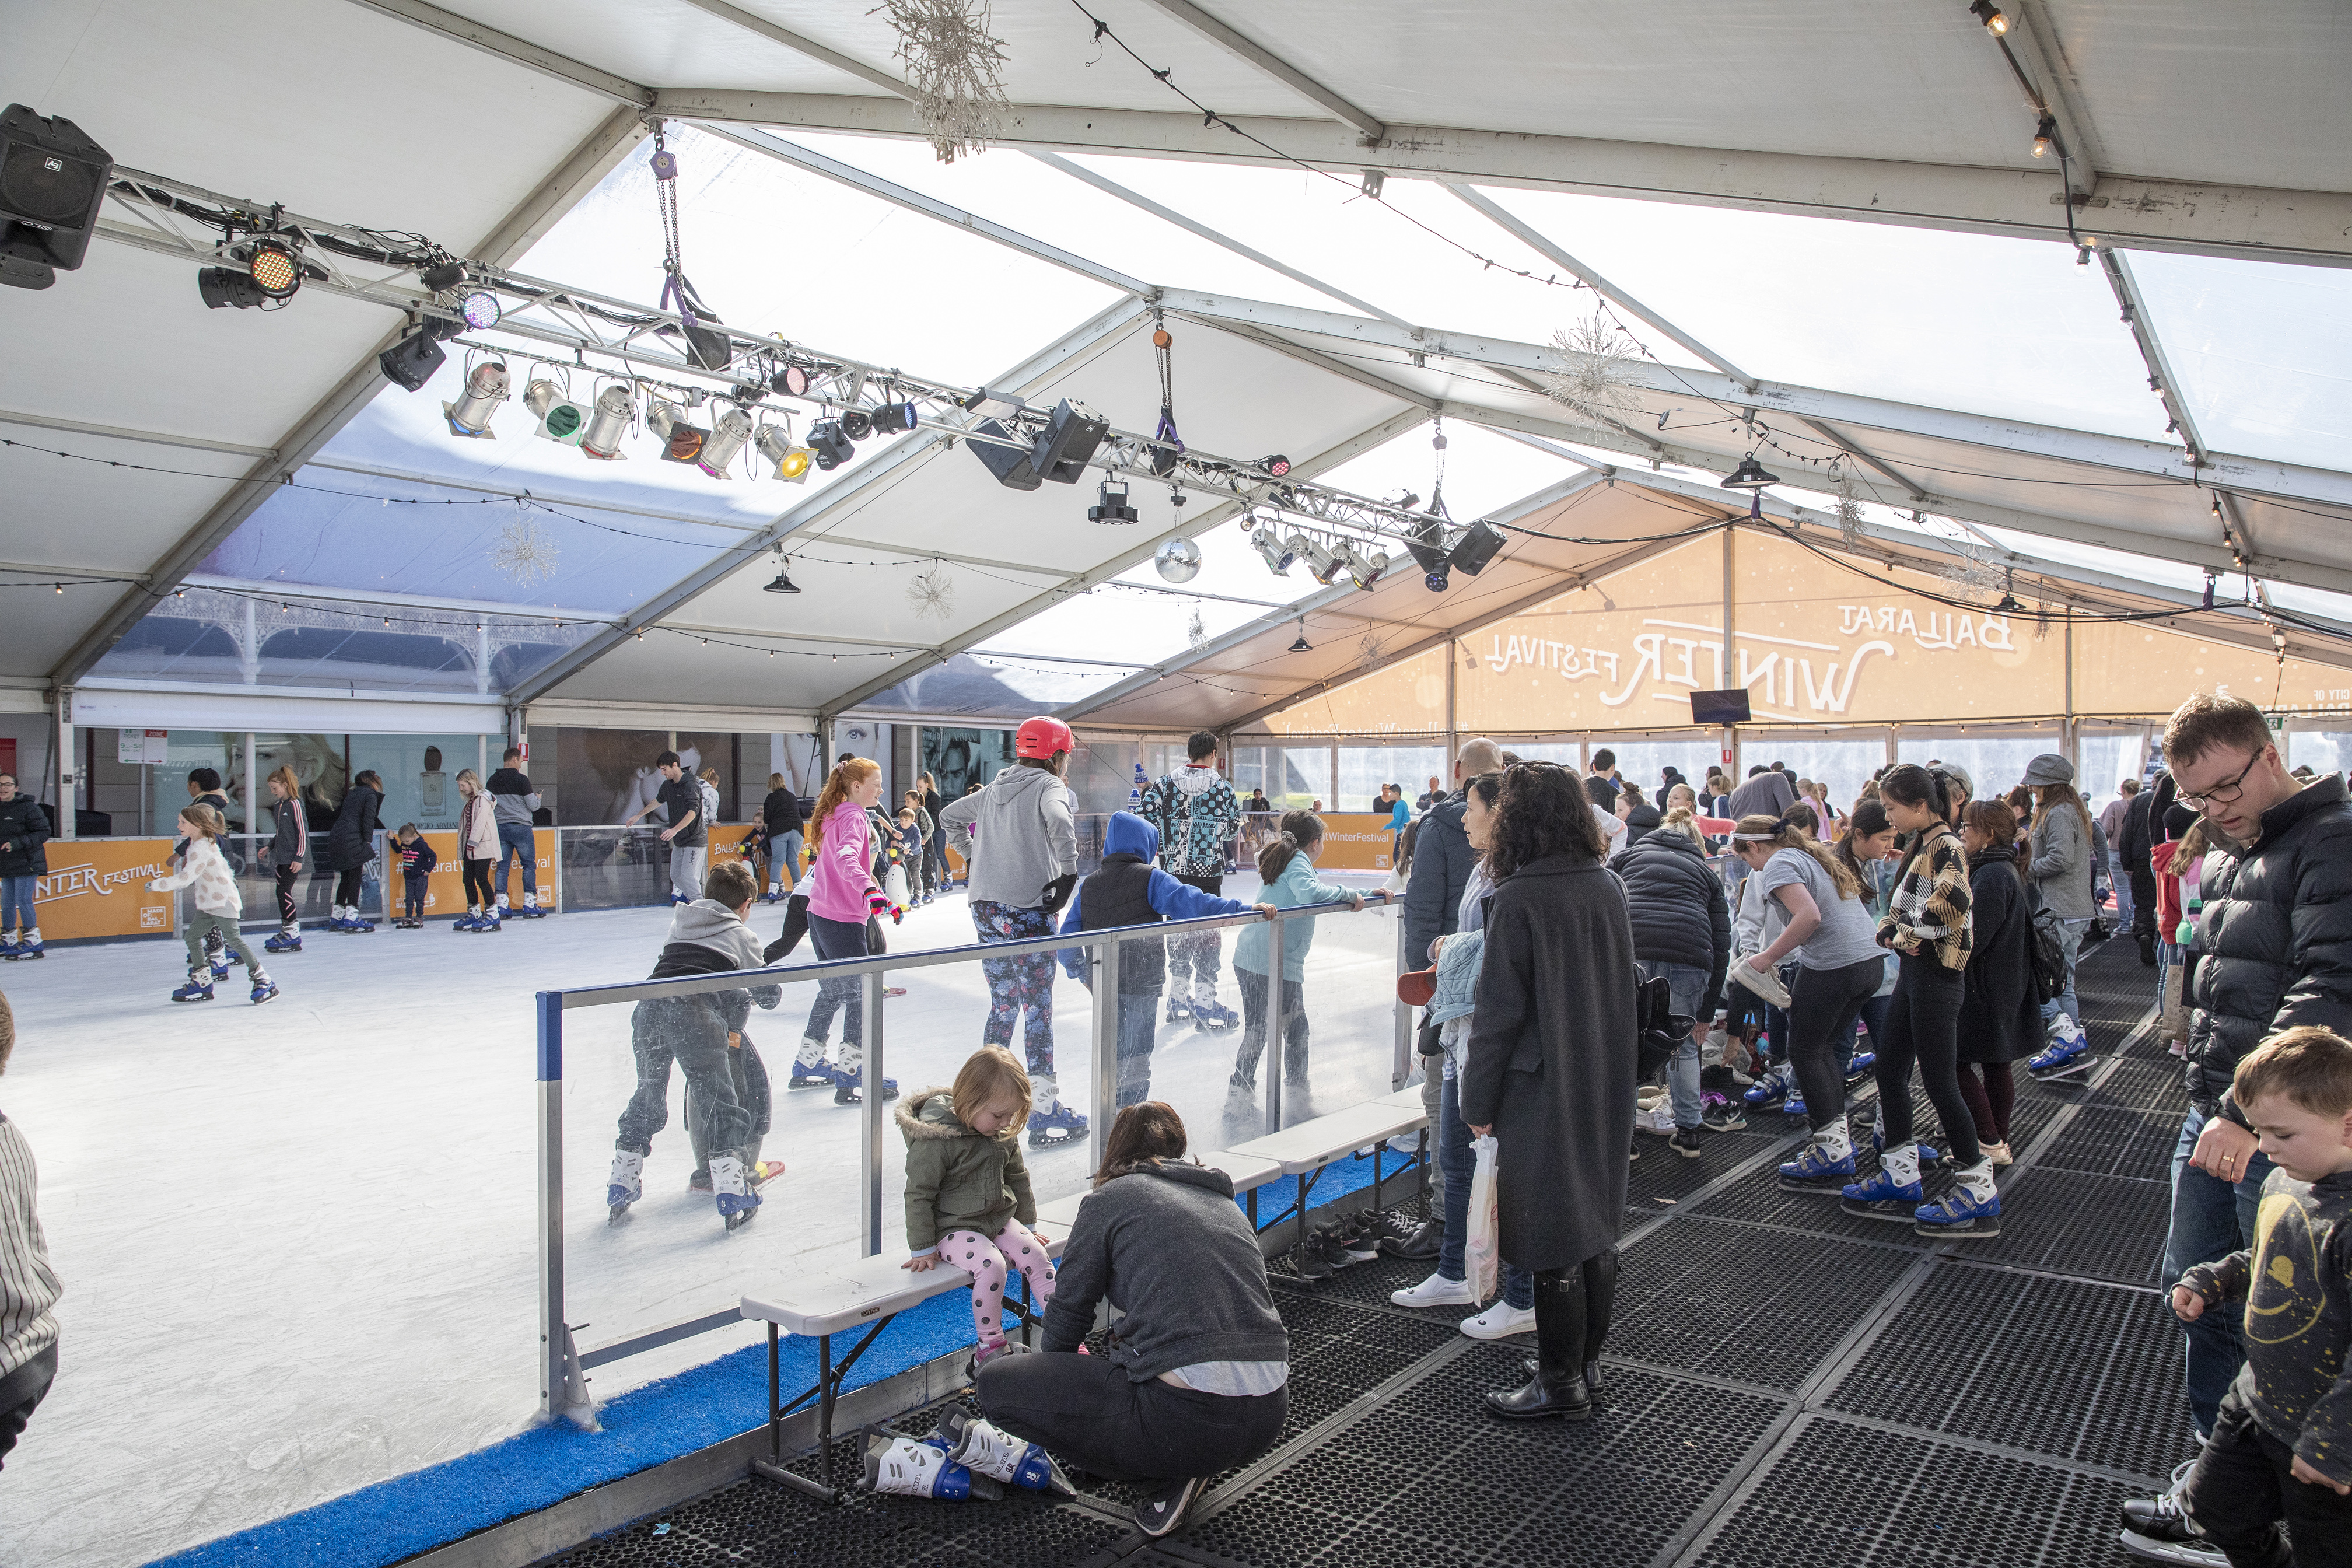 Ice skating rink photo 2019